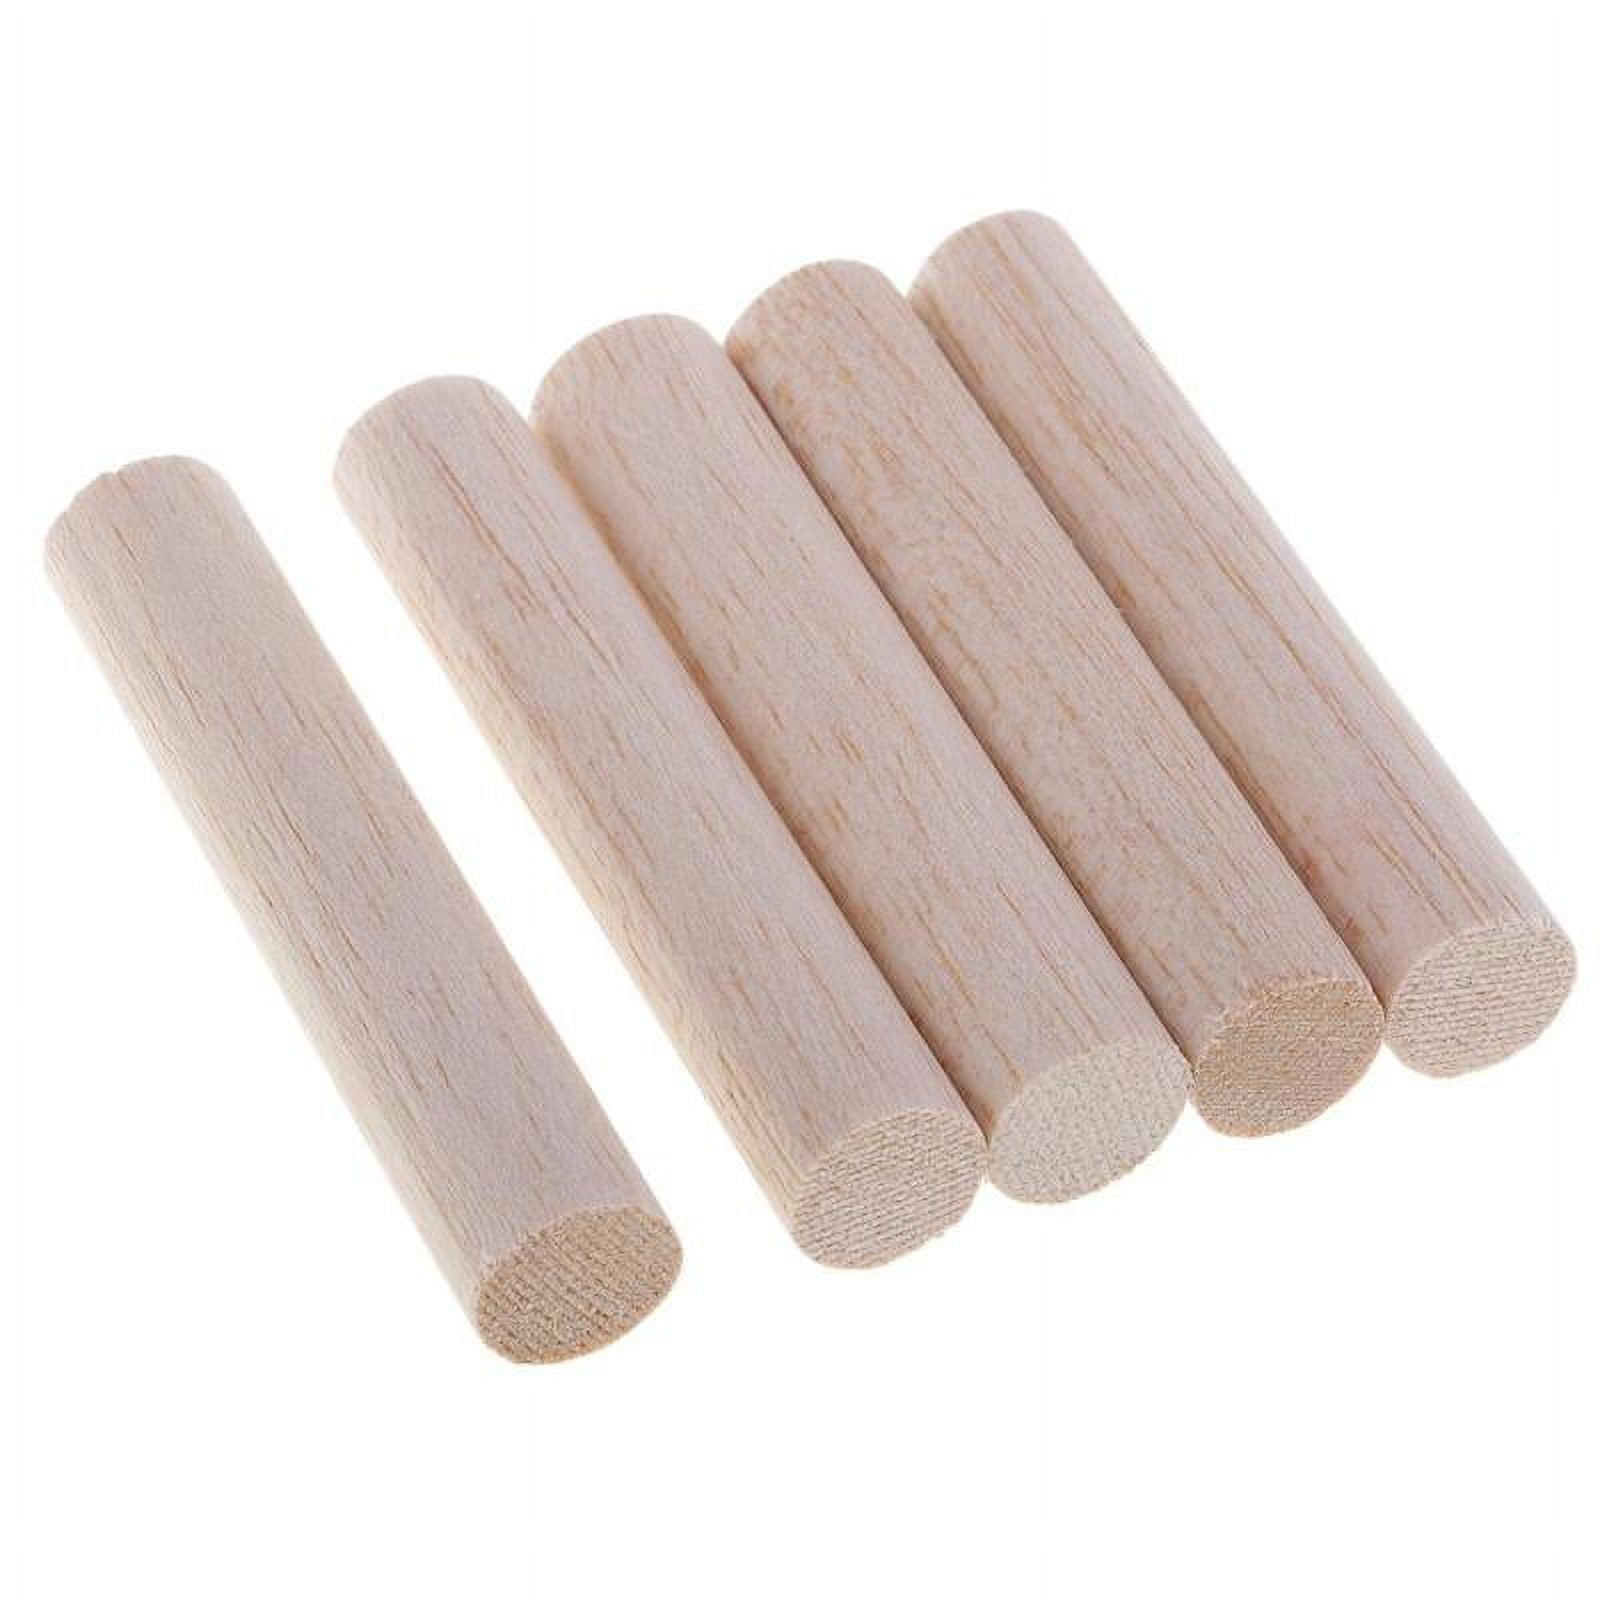 10pcs Balsa Round Wood Rounds Wooden Stick Circularity Sticks Diy 5mm  Diameter Manual Building Model Material 50mm-300mm Length - Bolts -  AliExpress